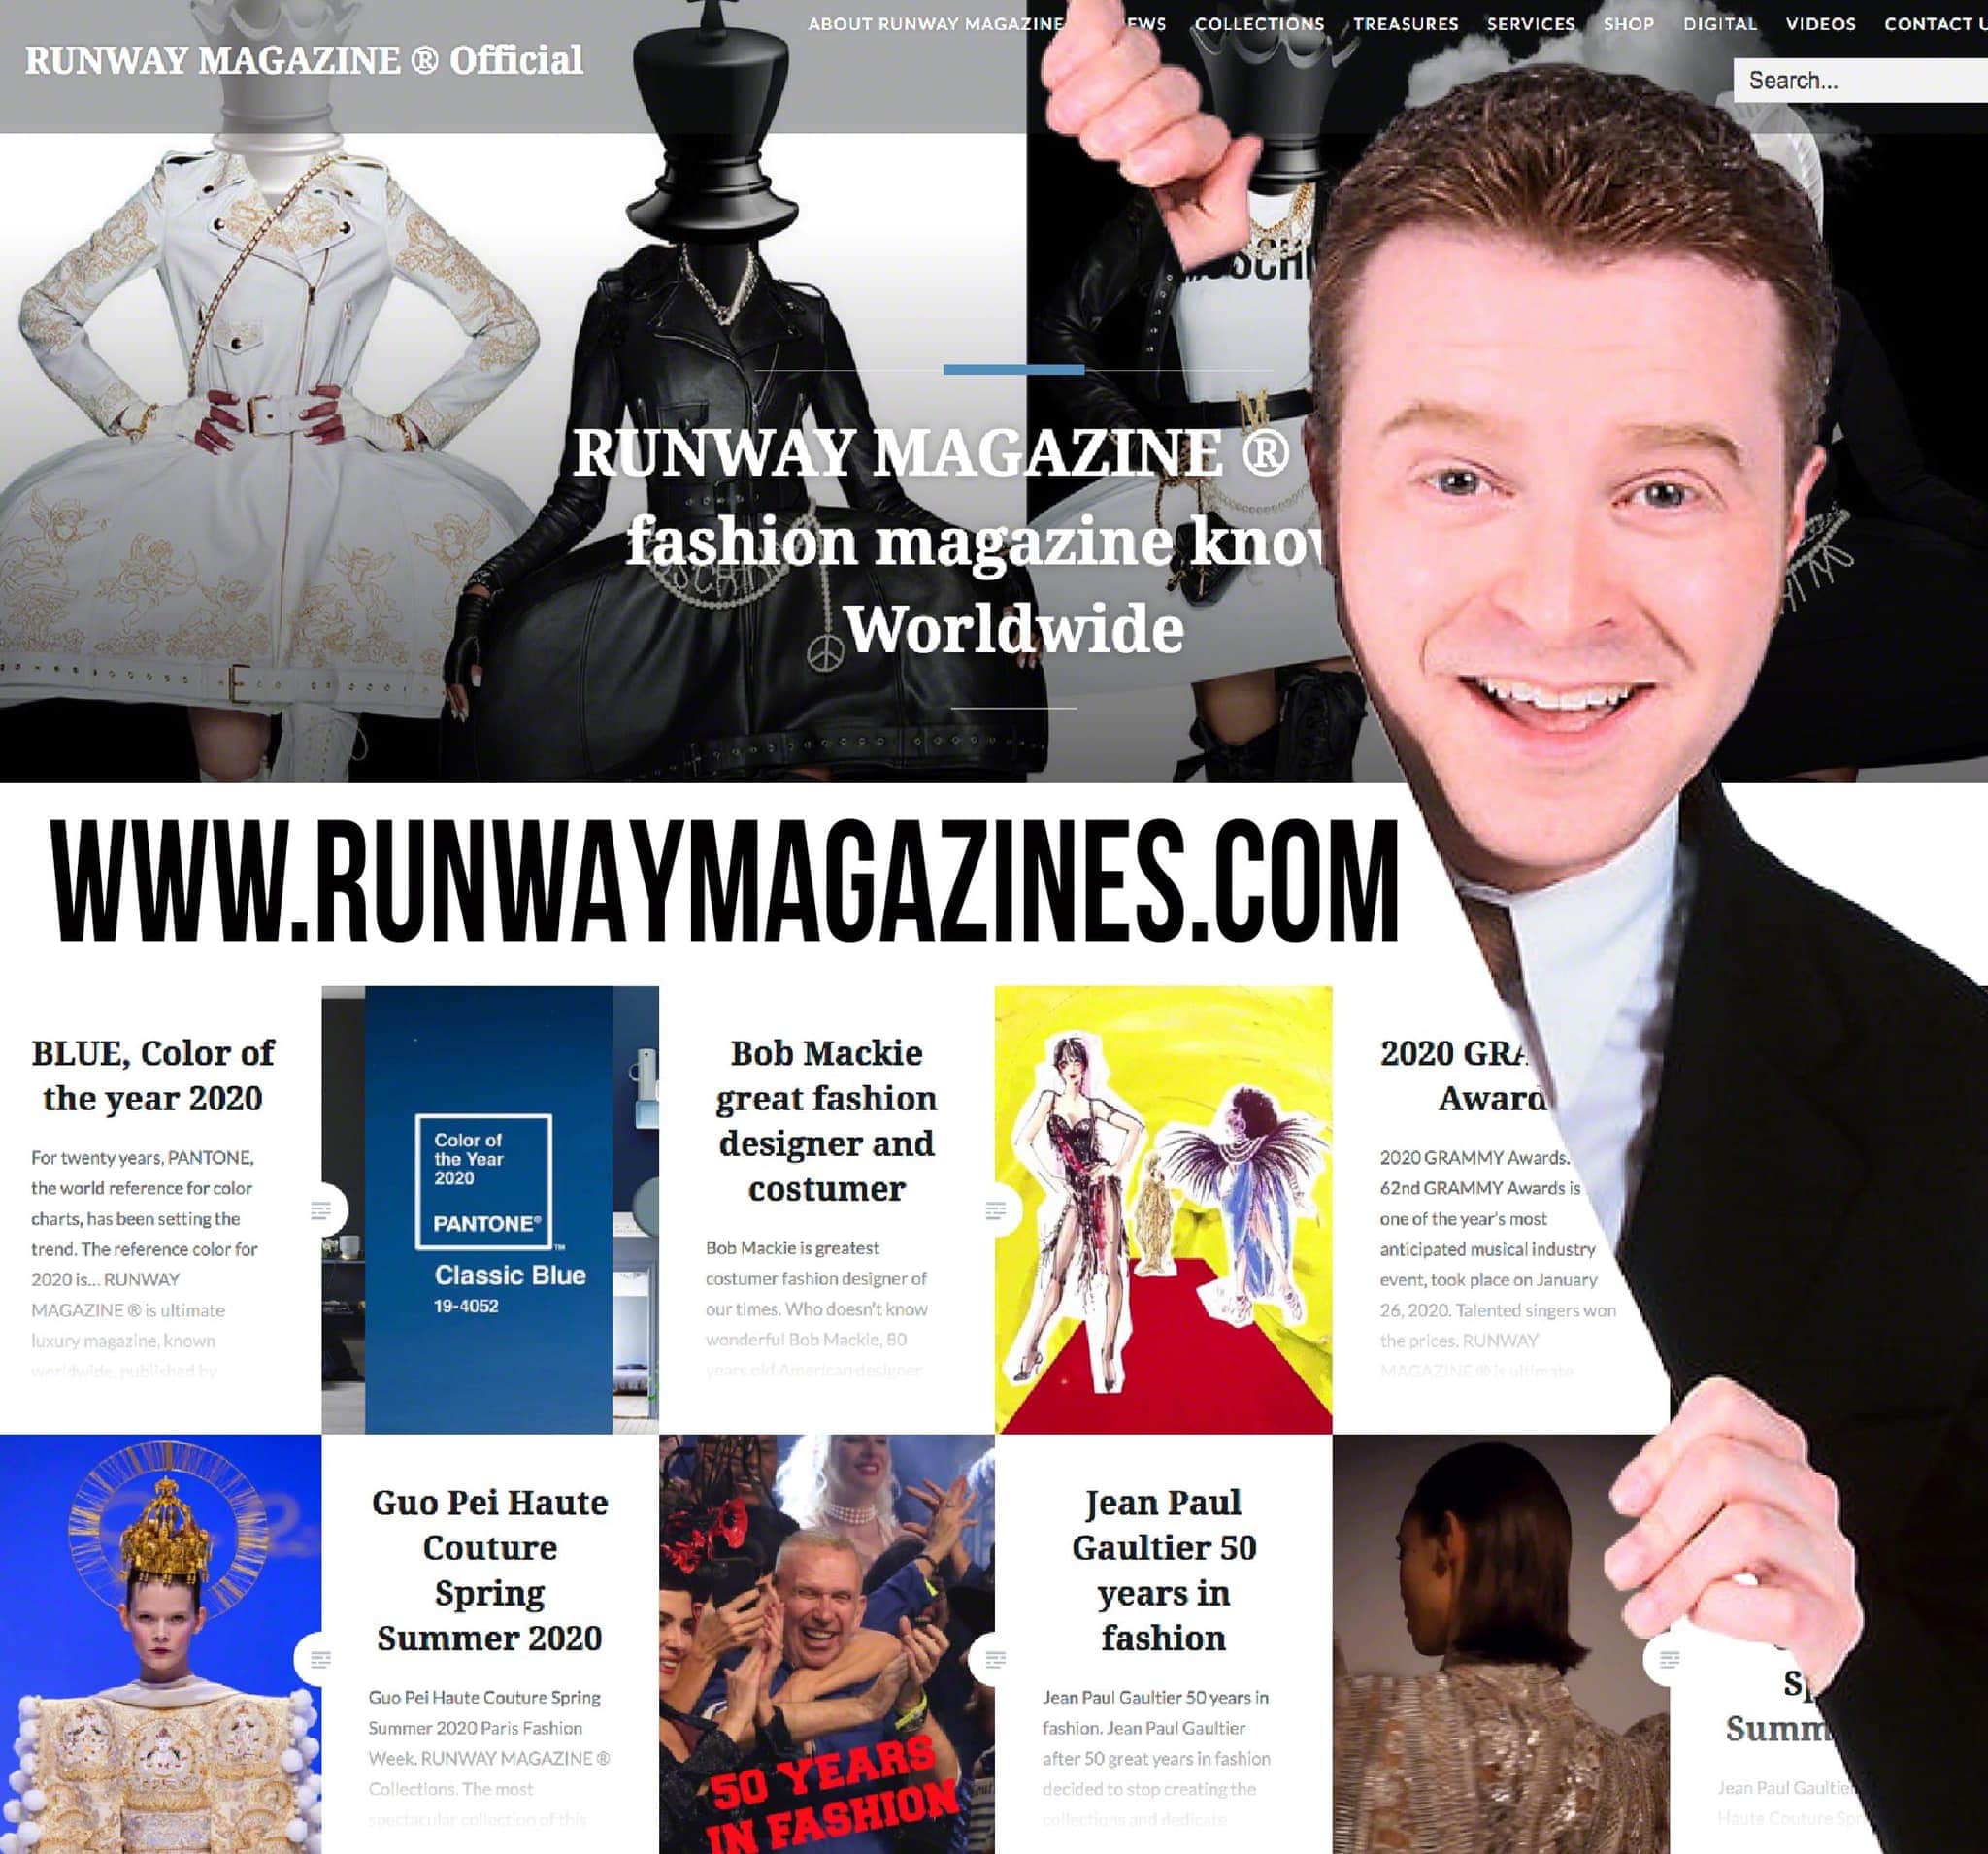 Runway Magazine subscribe